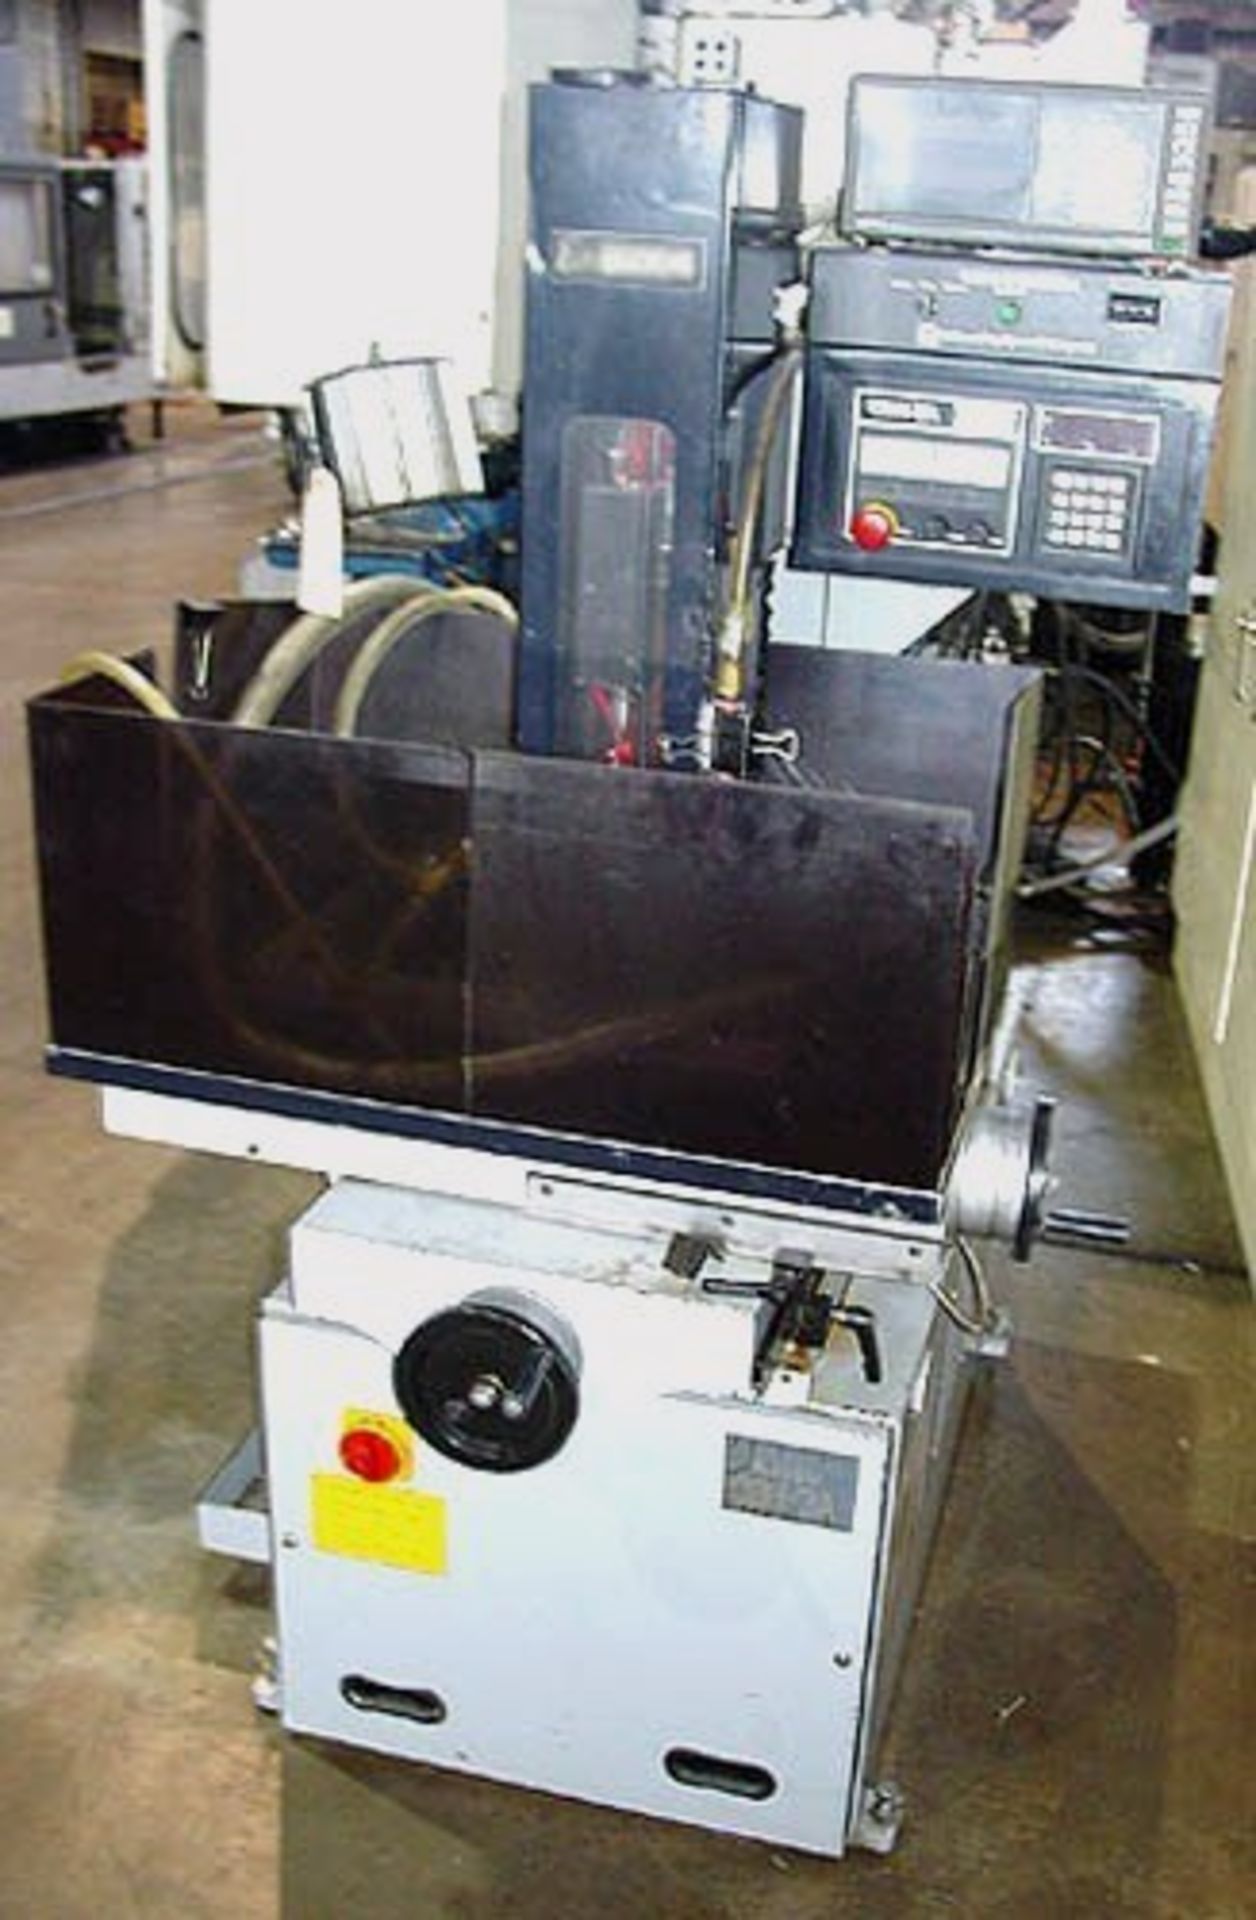 ASTEC EDM HOLE DRILLING MACHINE, Model CDH-3A, S/N 83A003199, New 1995